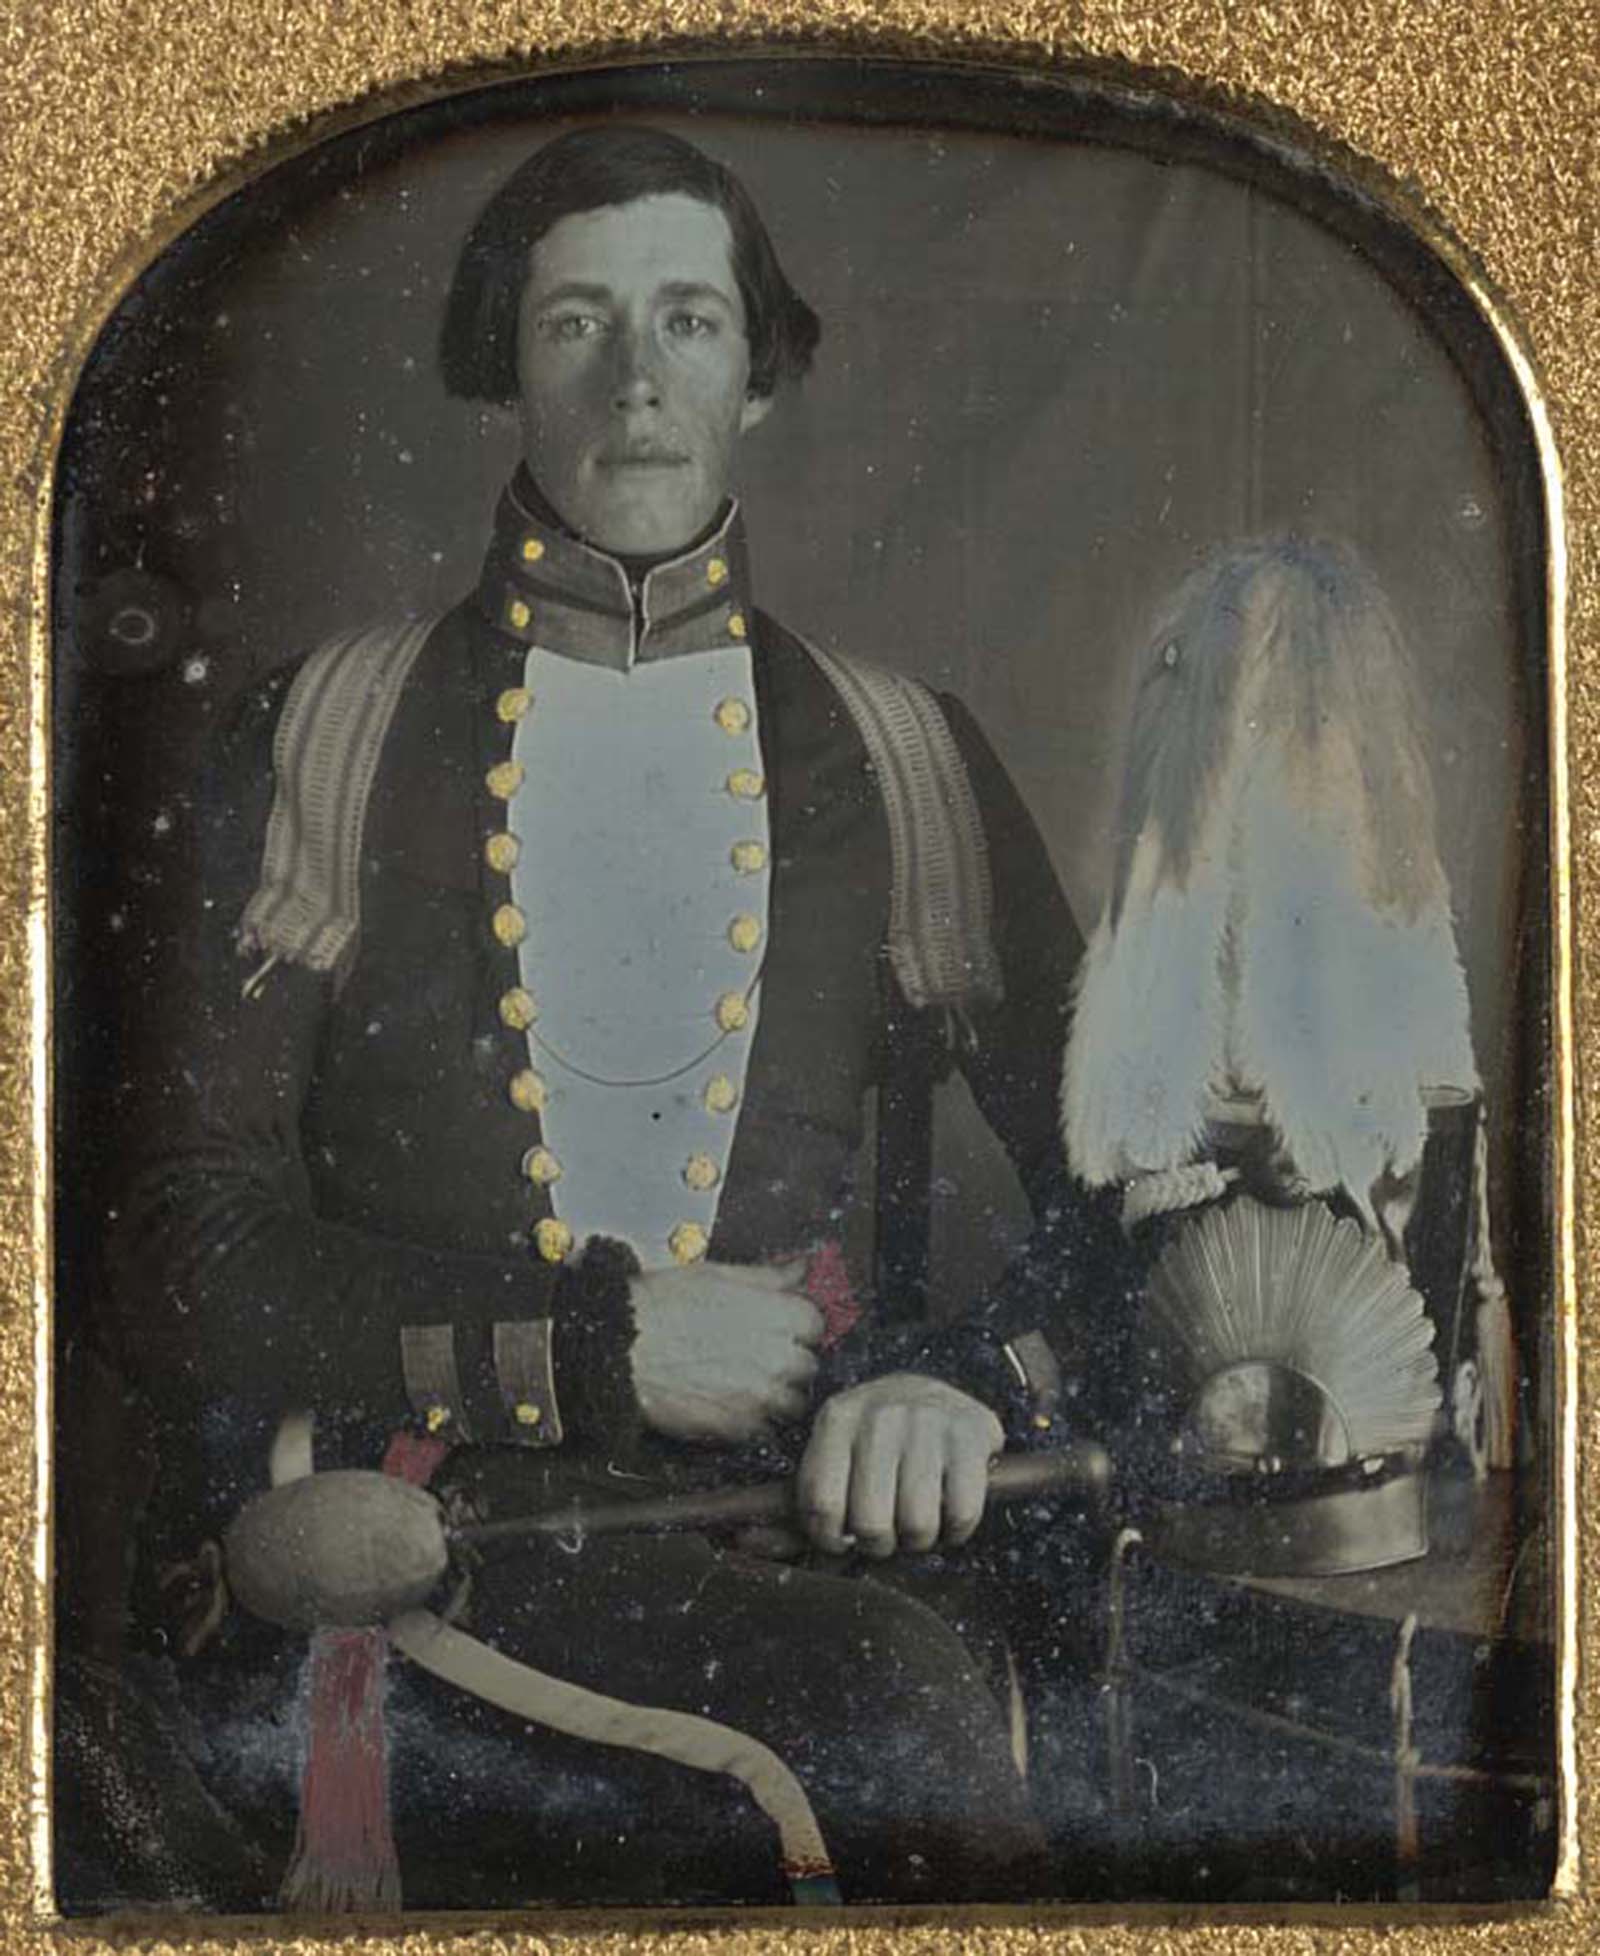 tintype Occupational portraits 19th century